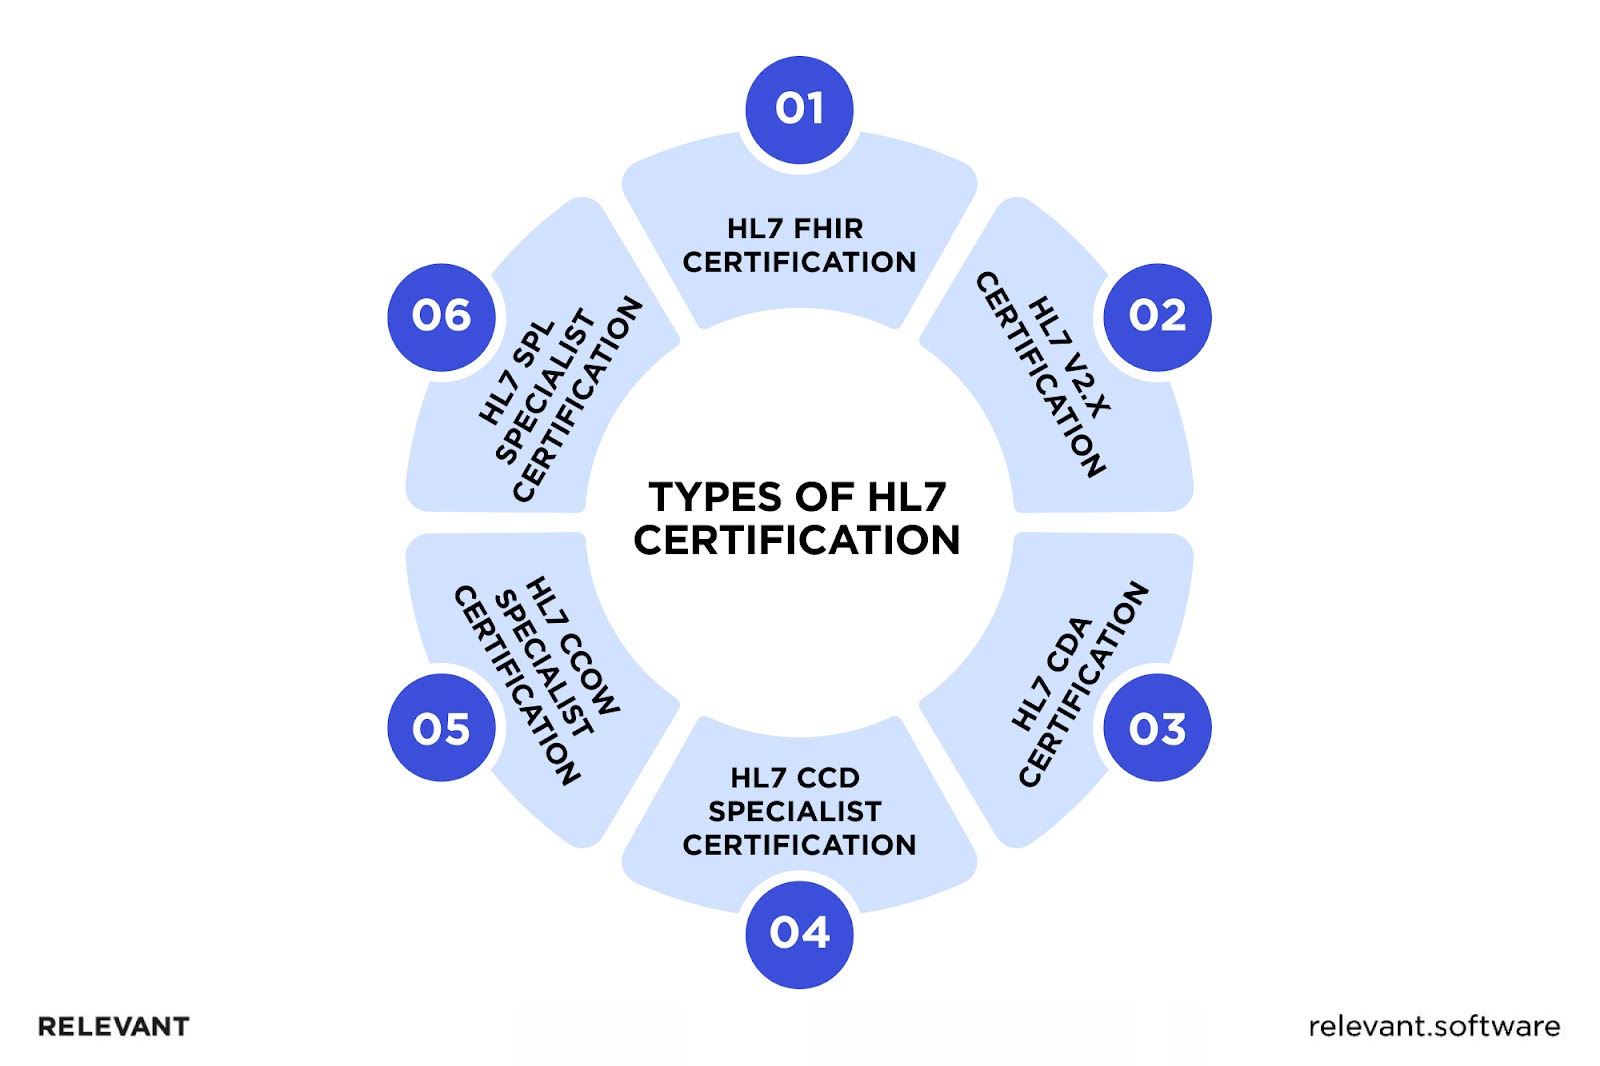 Types of HL7 Certification